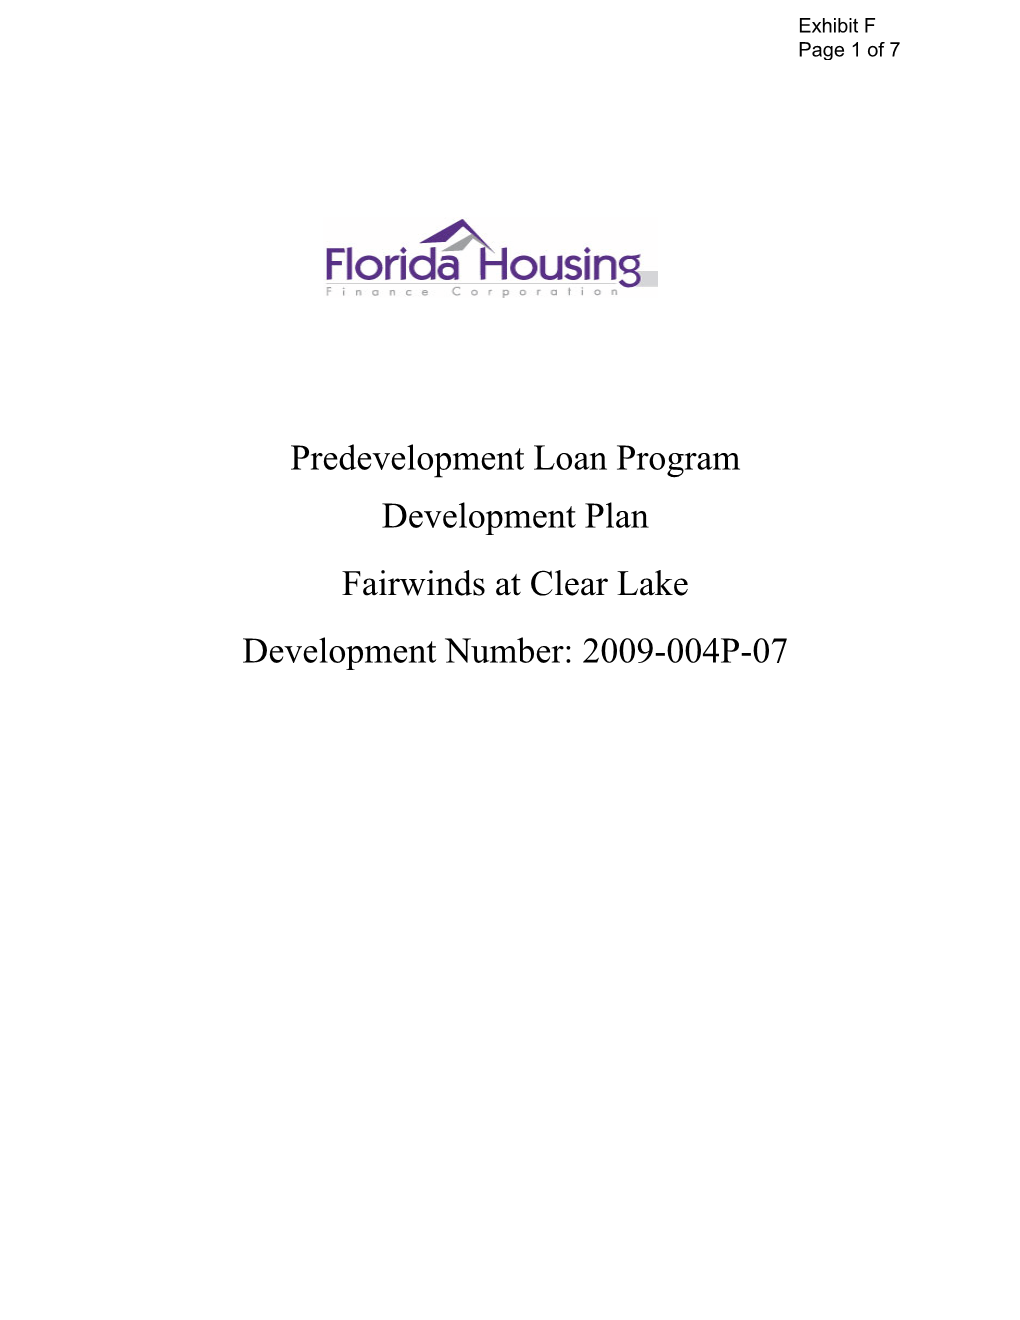 Development Plan Fairwinds at Clear Lake Development Number: 2009-004P-07 Predevelopment Loan Program